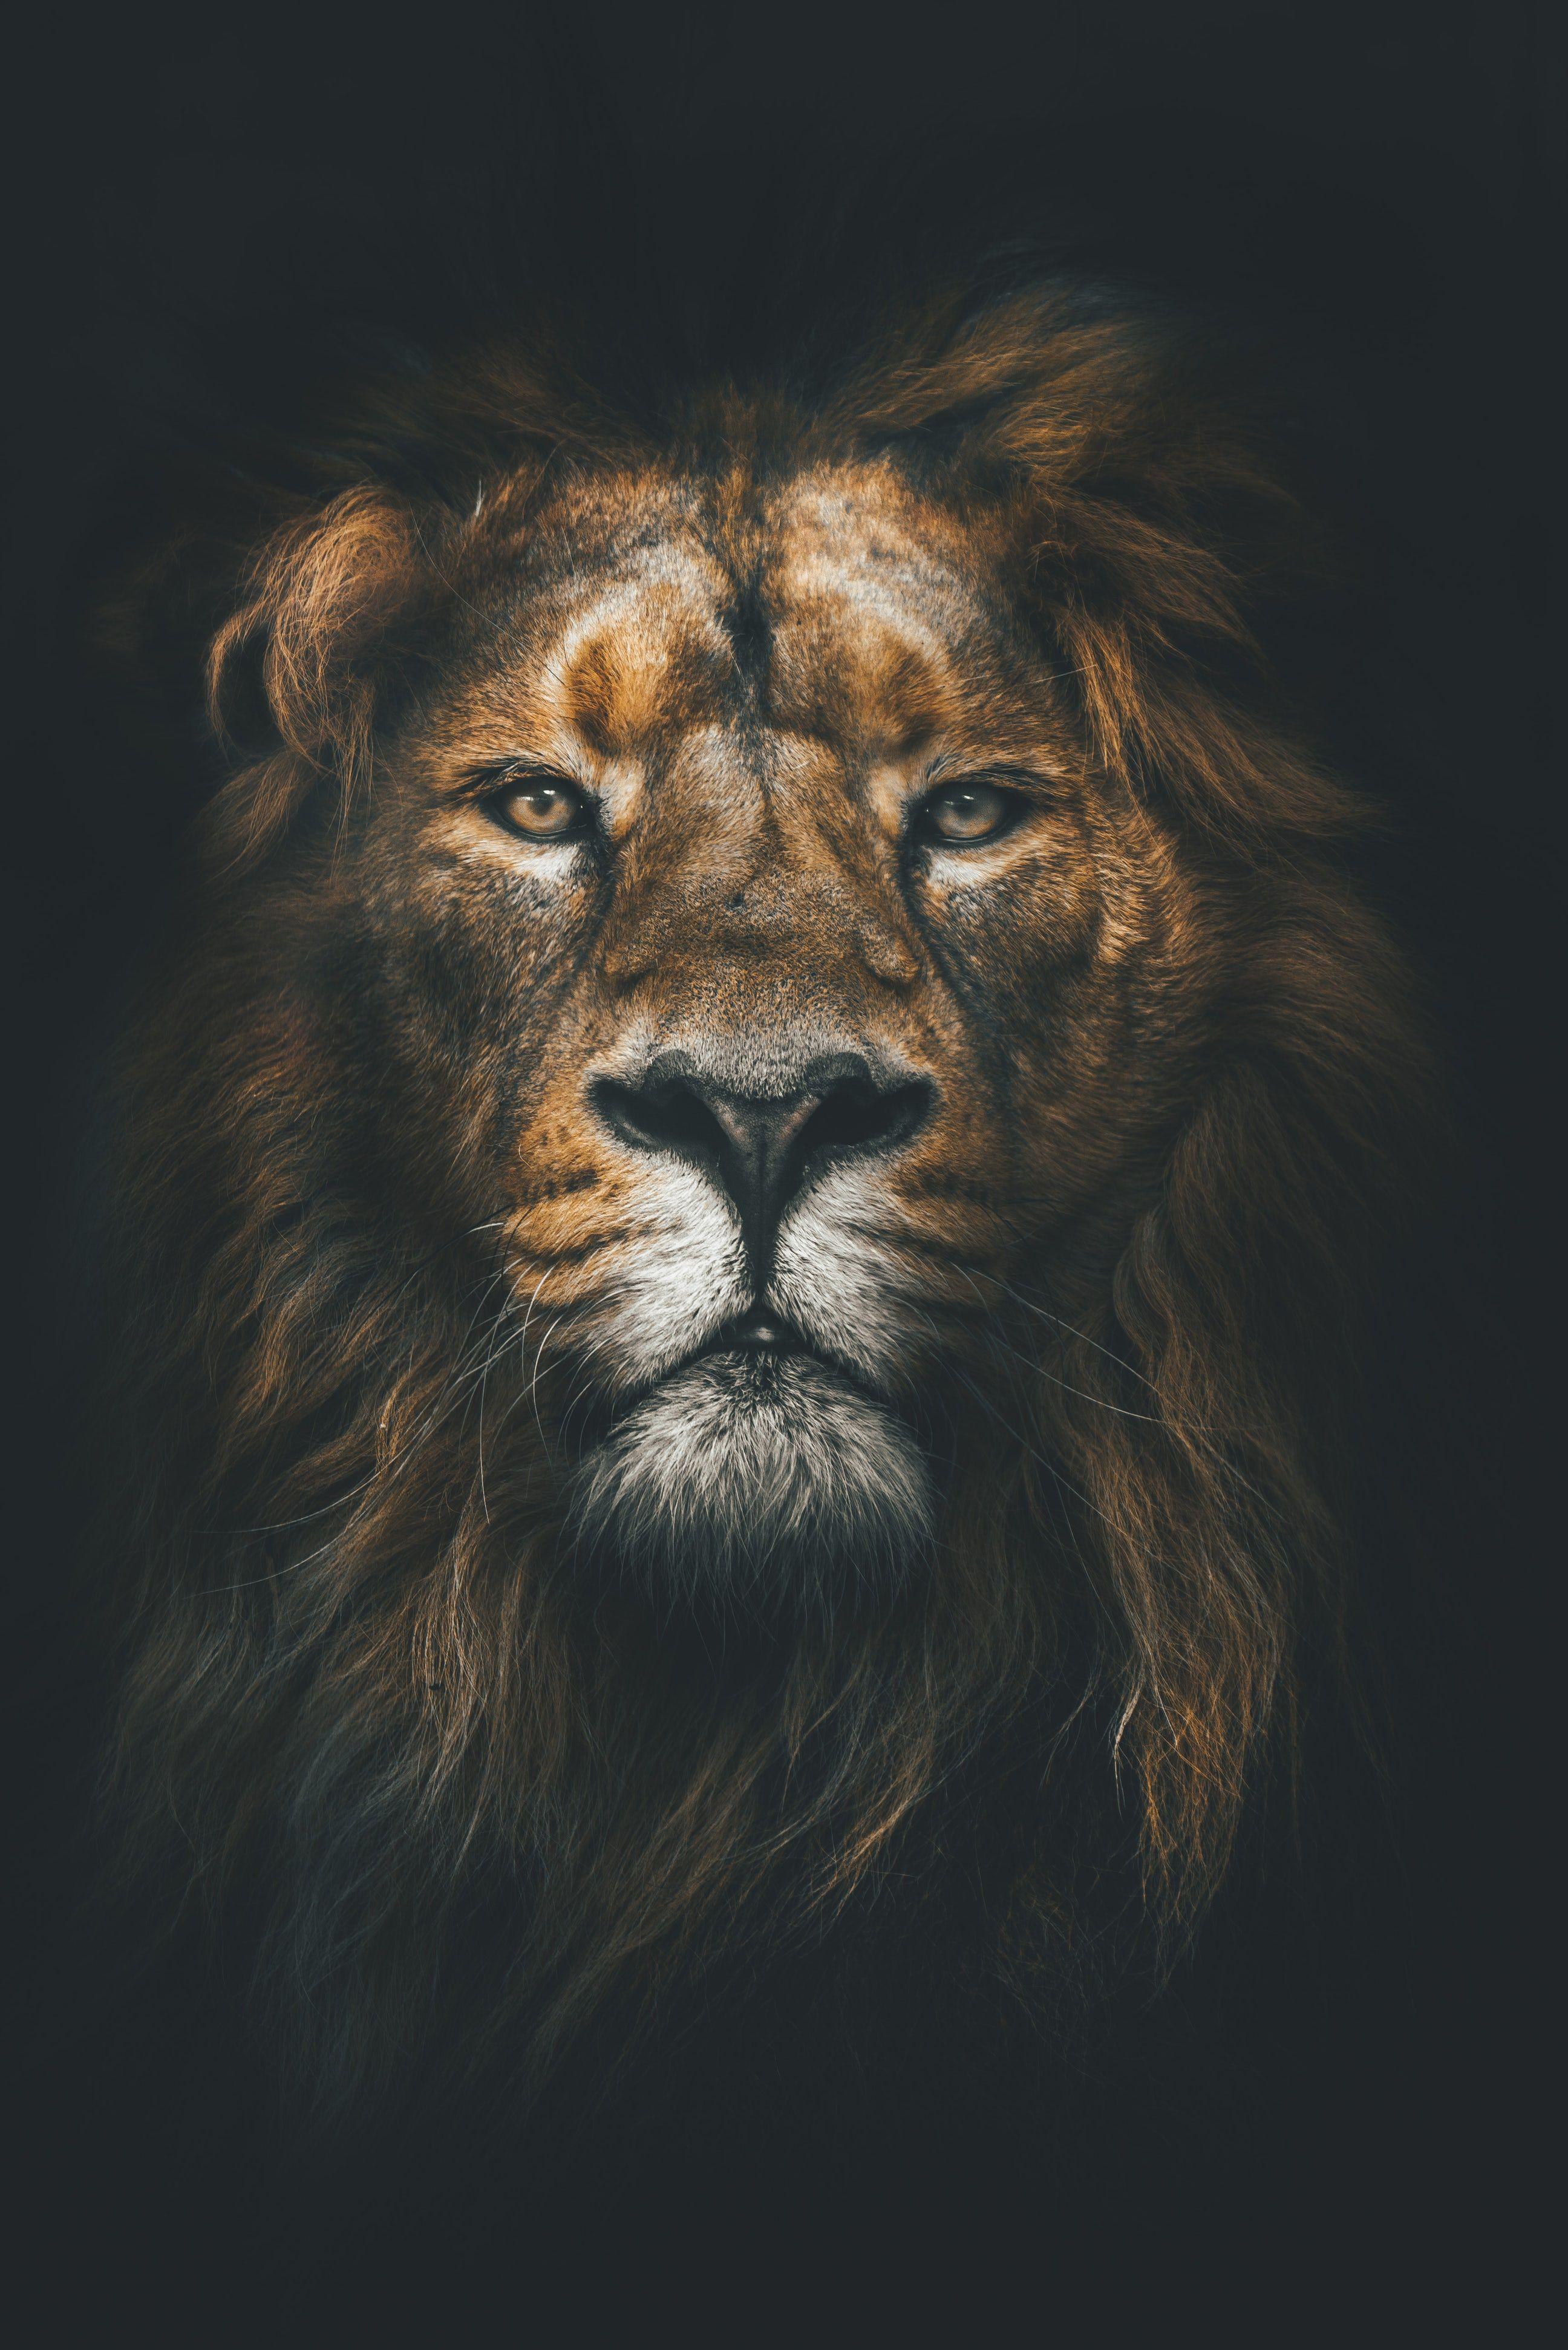 Tourist Africa Picture. Download Free Image. Lion wallpaper, Lion art, Lion